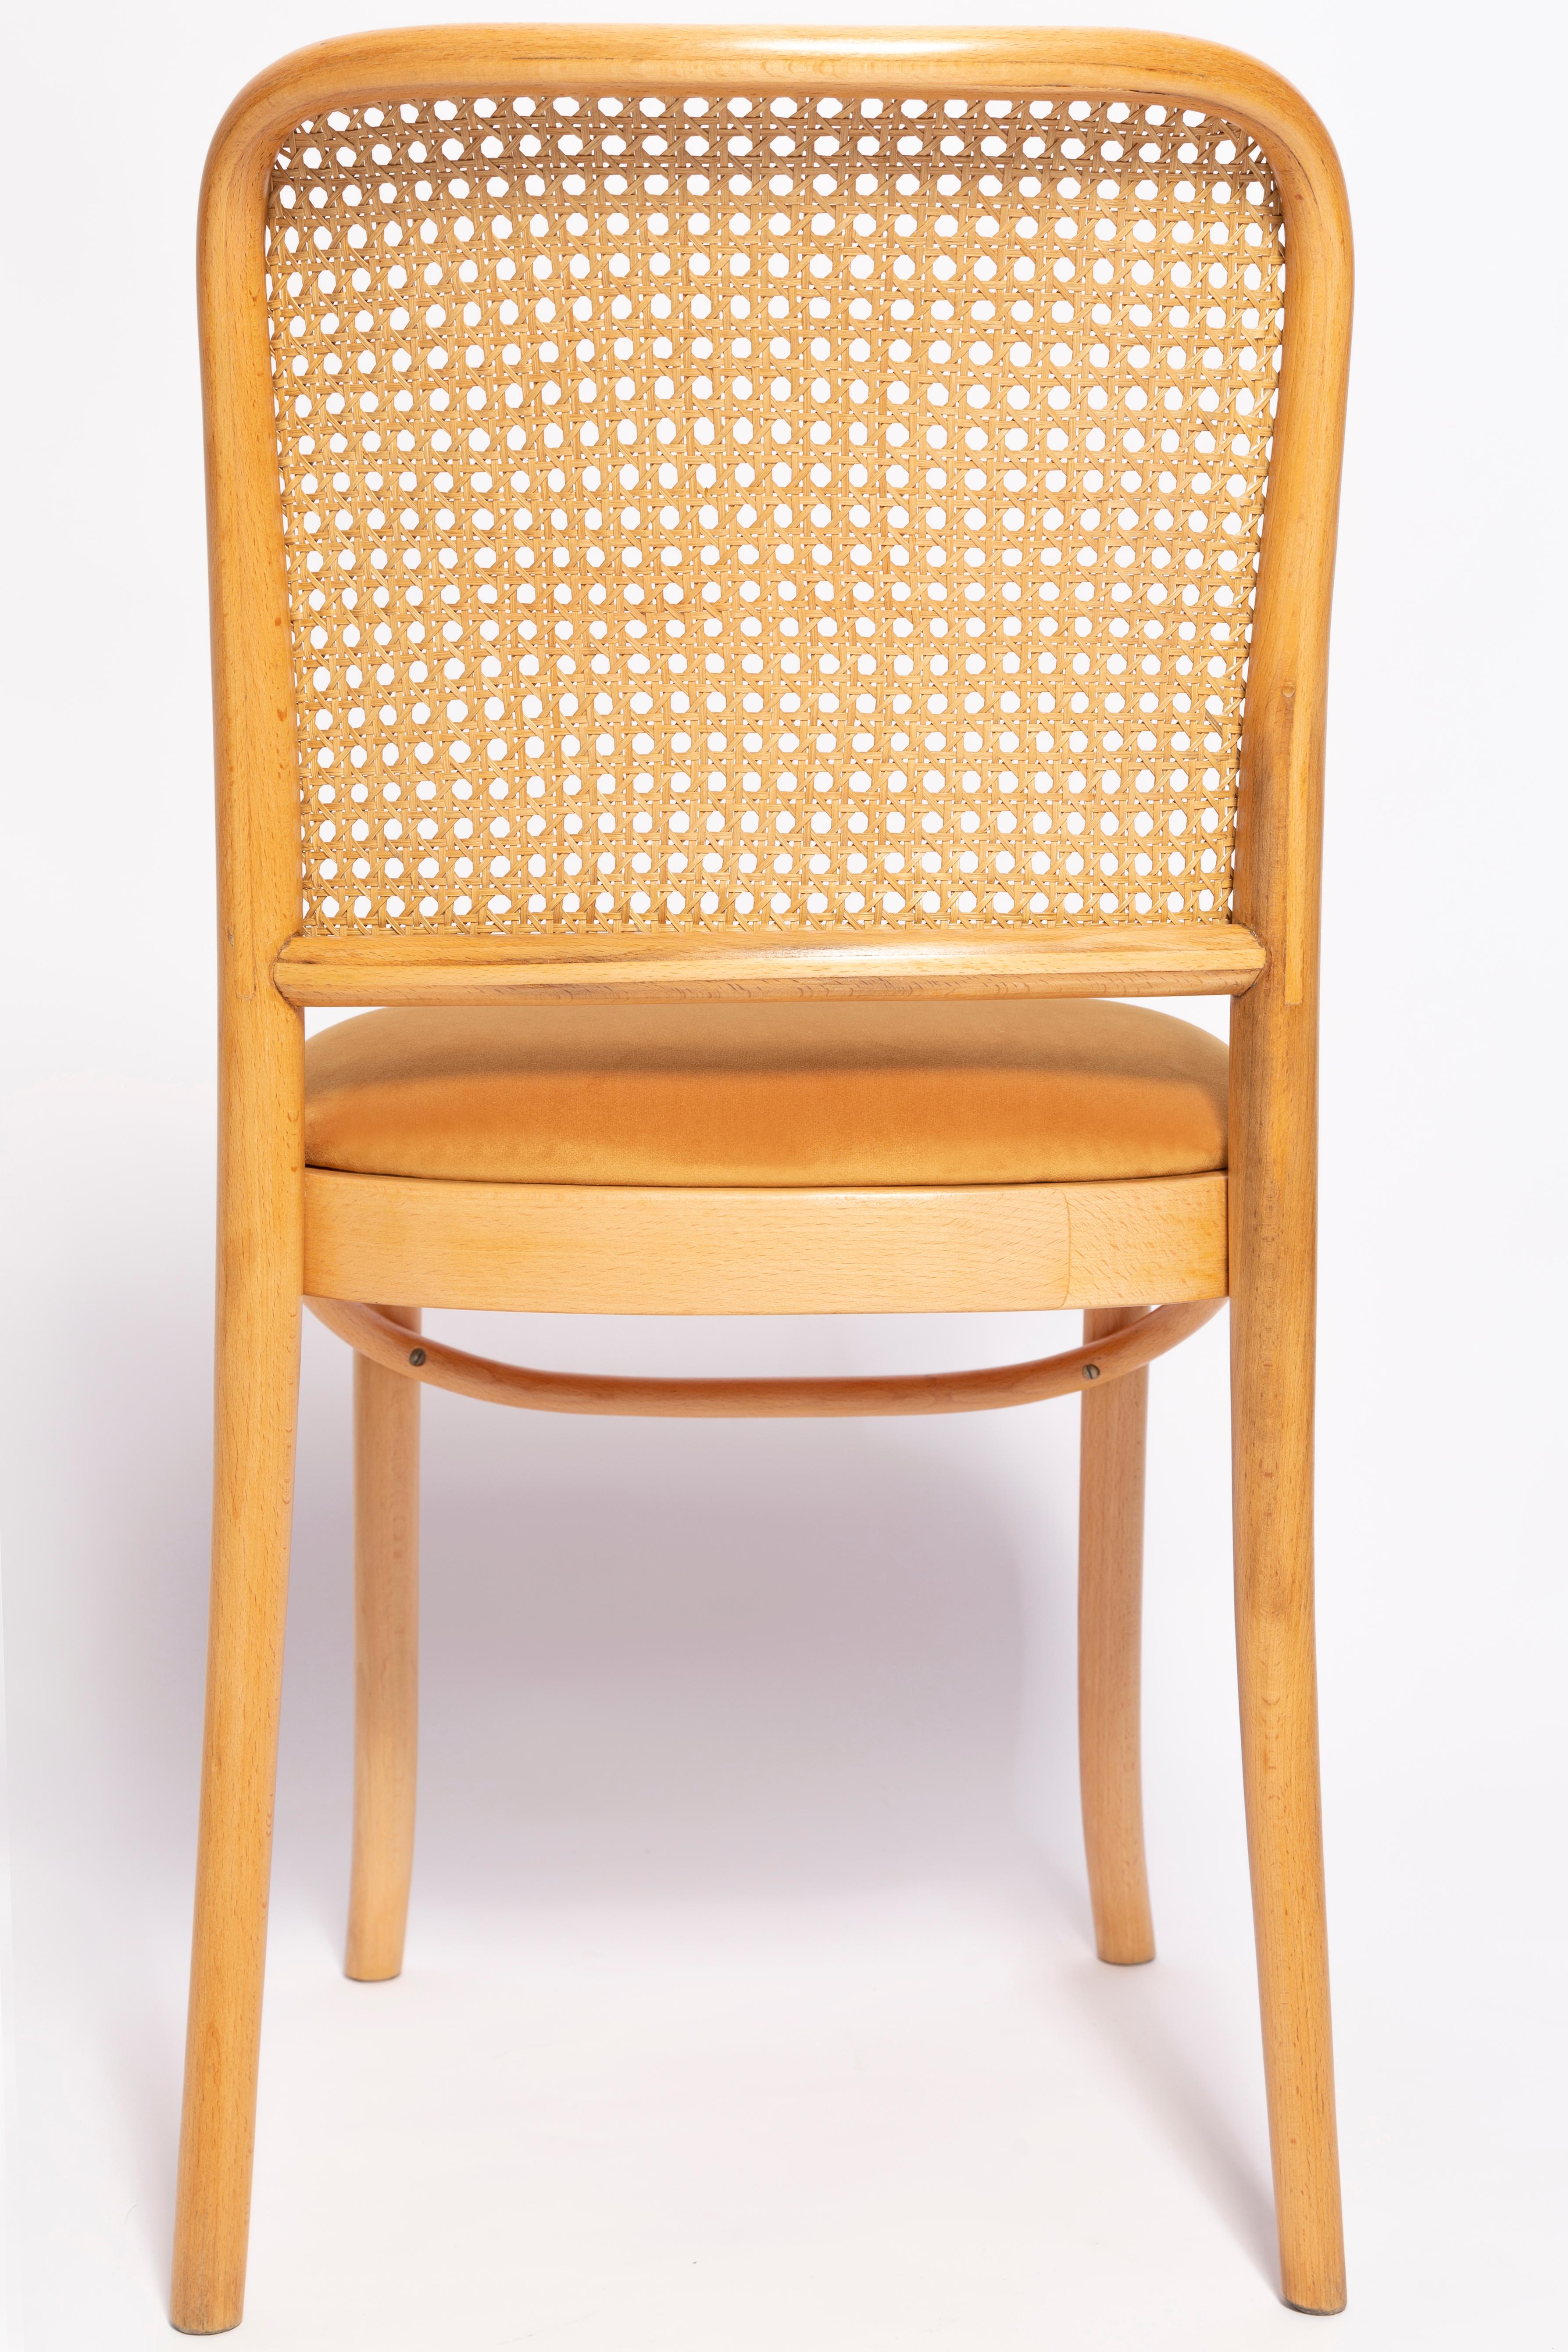 Mid-Century Yellow Velvet Thonet Wood Rattan Chair, Europe, 1960s For Sale 3